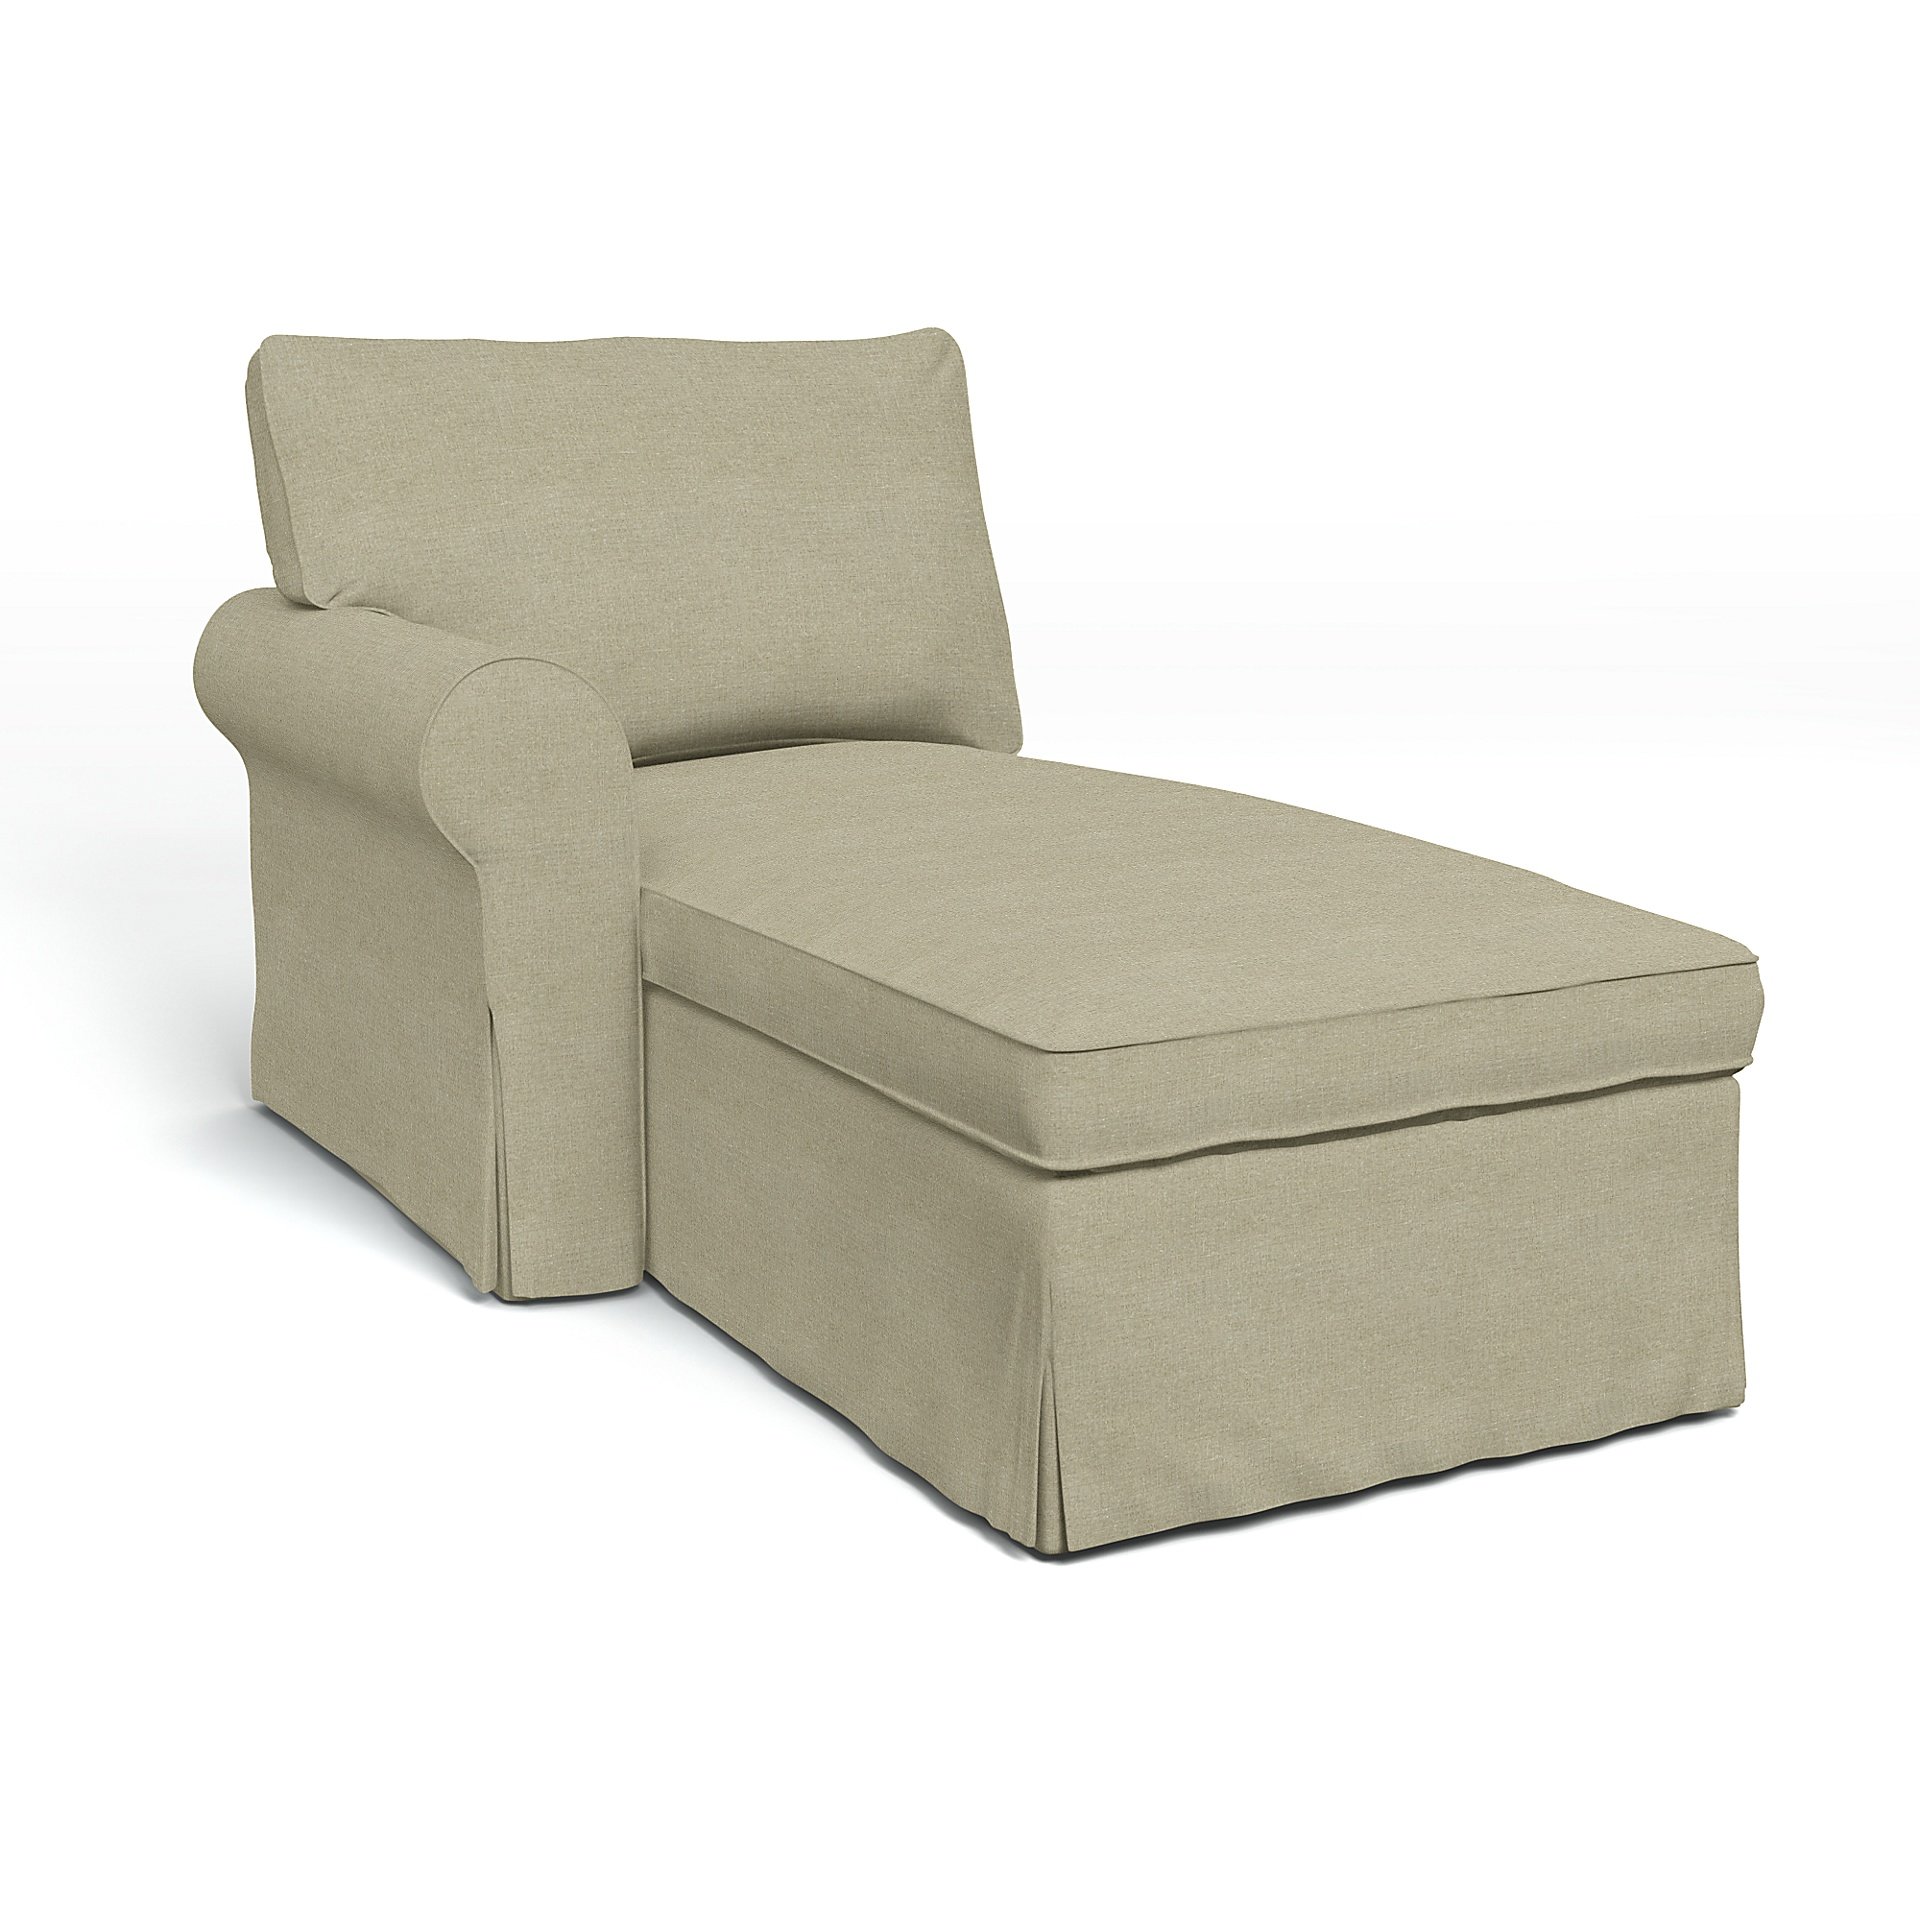 IKEA - Ektorp Chaise with Left Armrest Cover, Pebble, Linen - Bemz